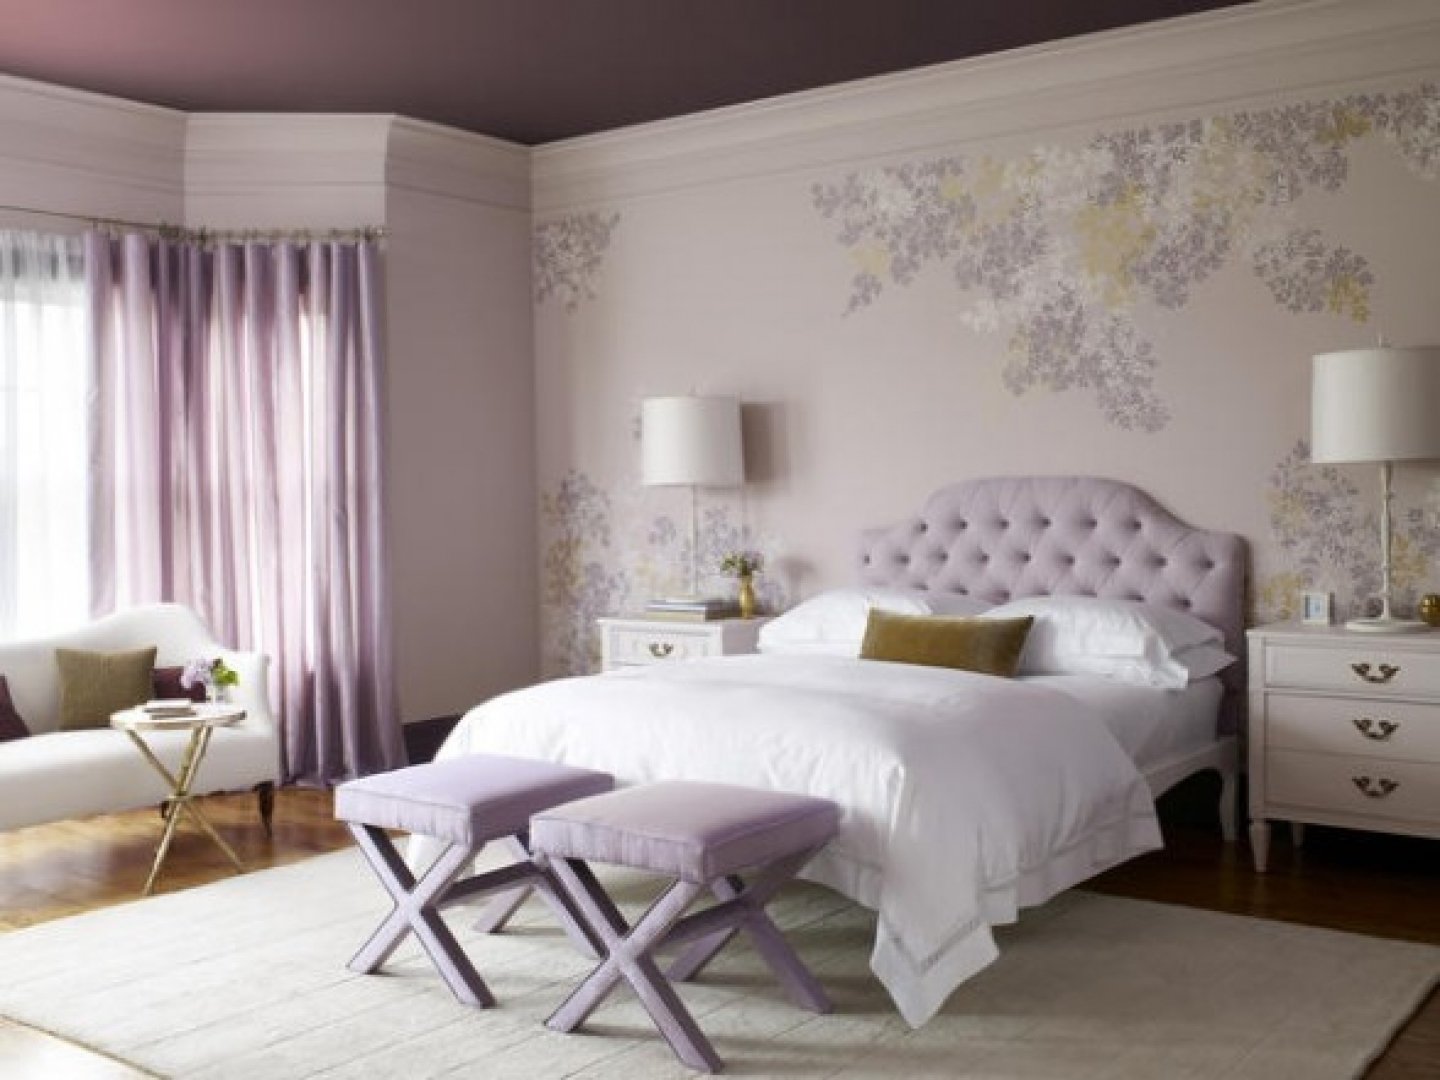 10 Fantastic Purple And Grey Bedroom Ideas collection in gray and purple bedroom ideas related to interior 1 2023